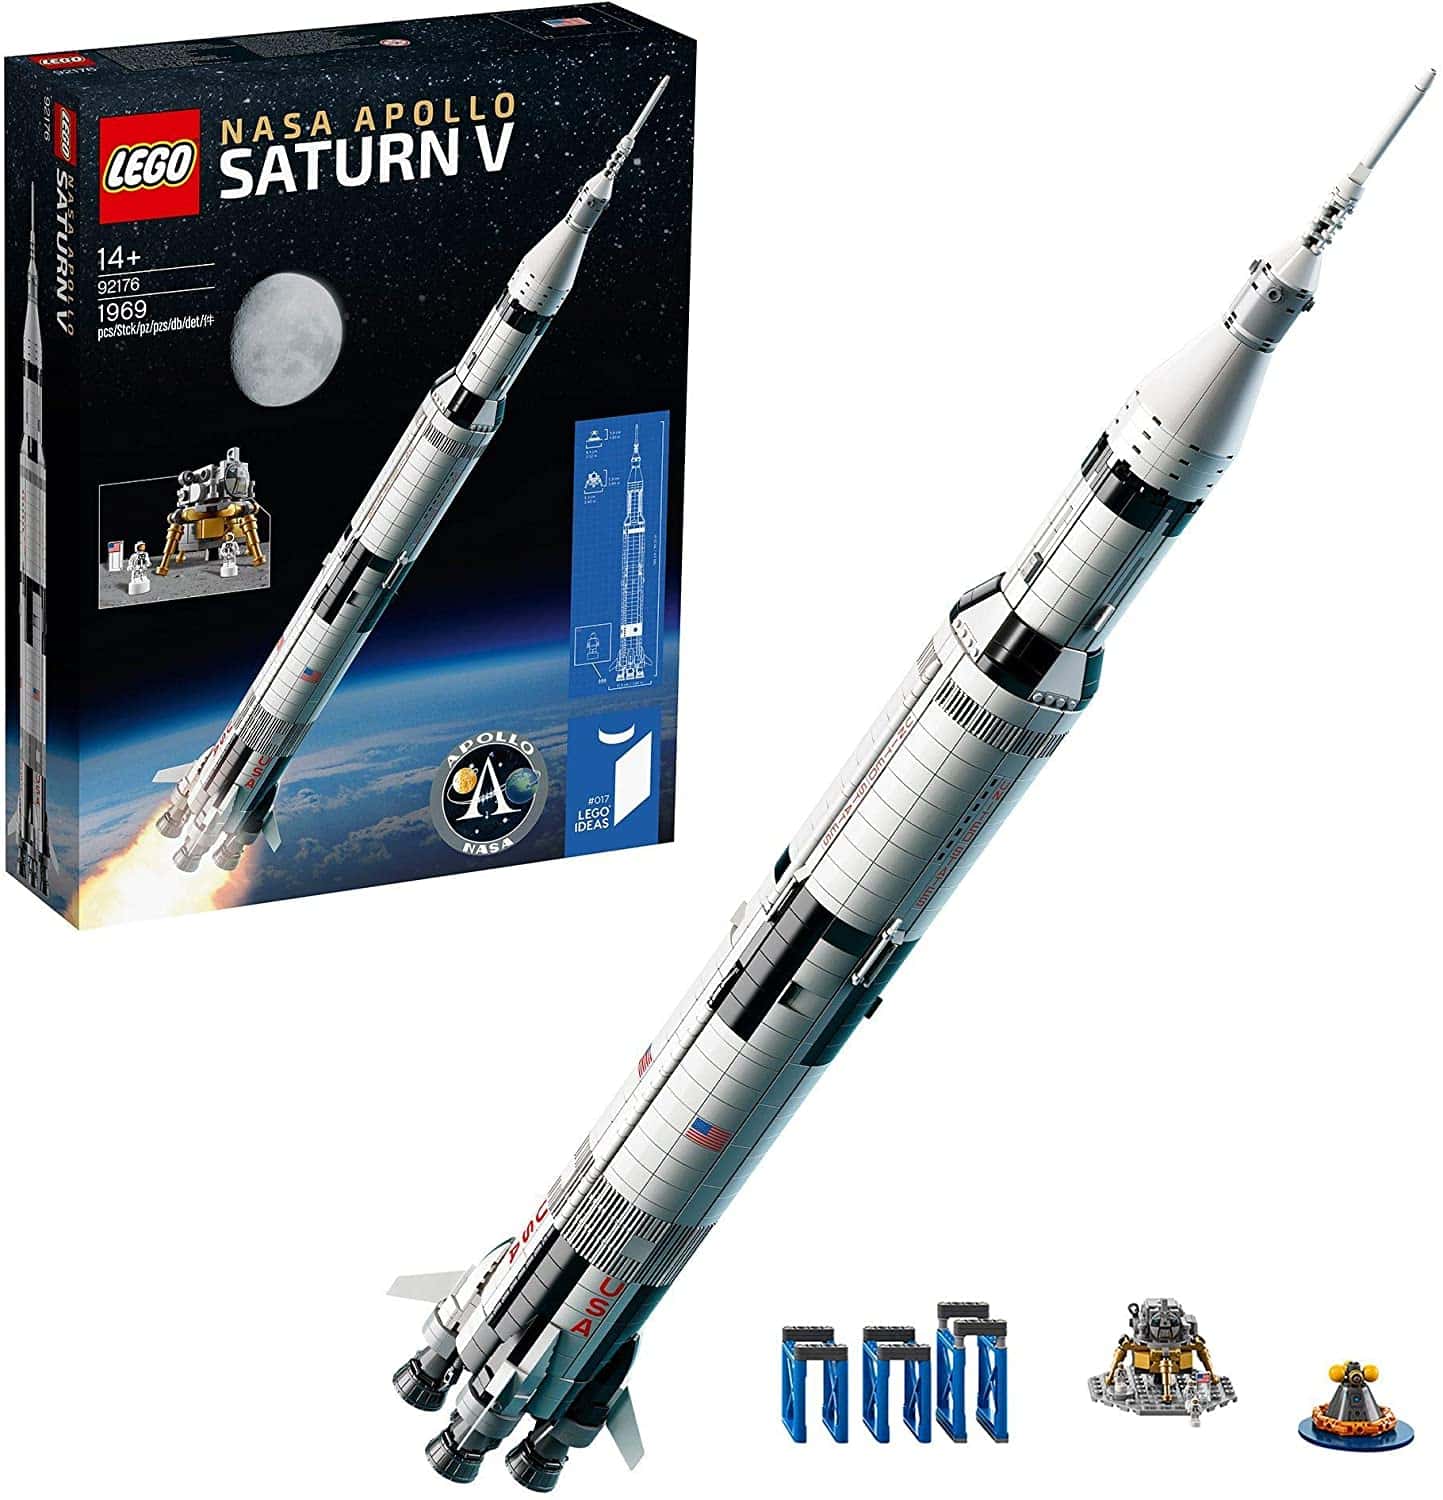 https://toyspuissance3.fr/wp-content/uploads/2021/04/LEGO%C2%AE-NASA-Apollo-Saturn-V-2em-e%CC%81dition92176-toyspuissance3.jpg